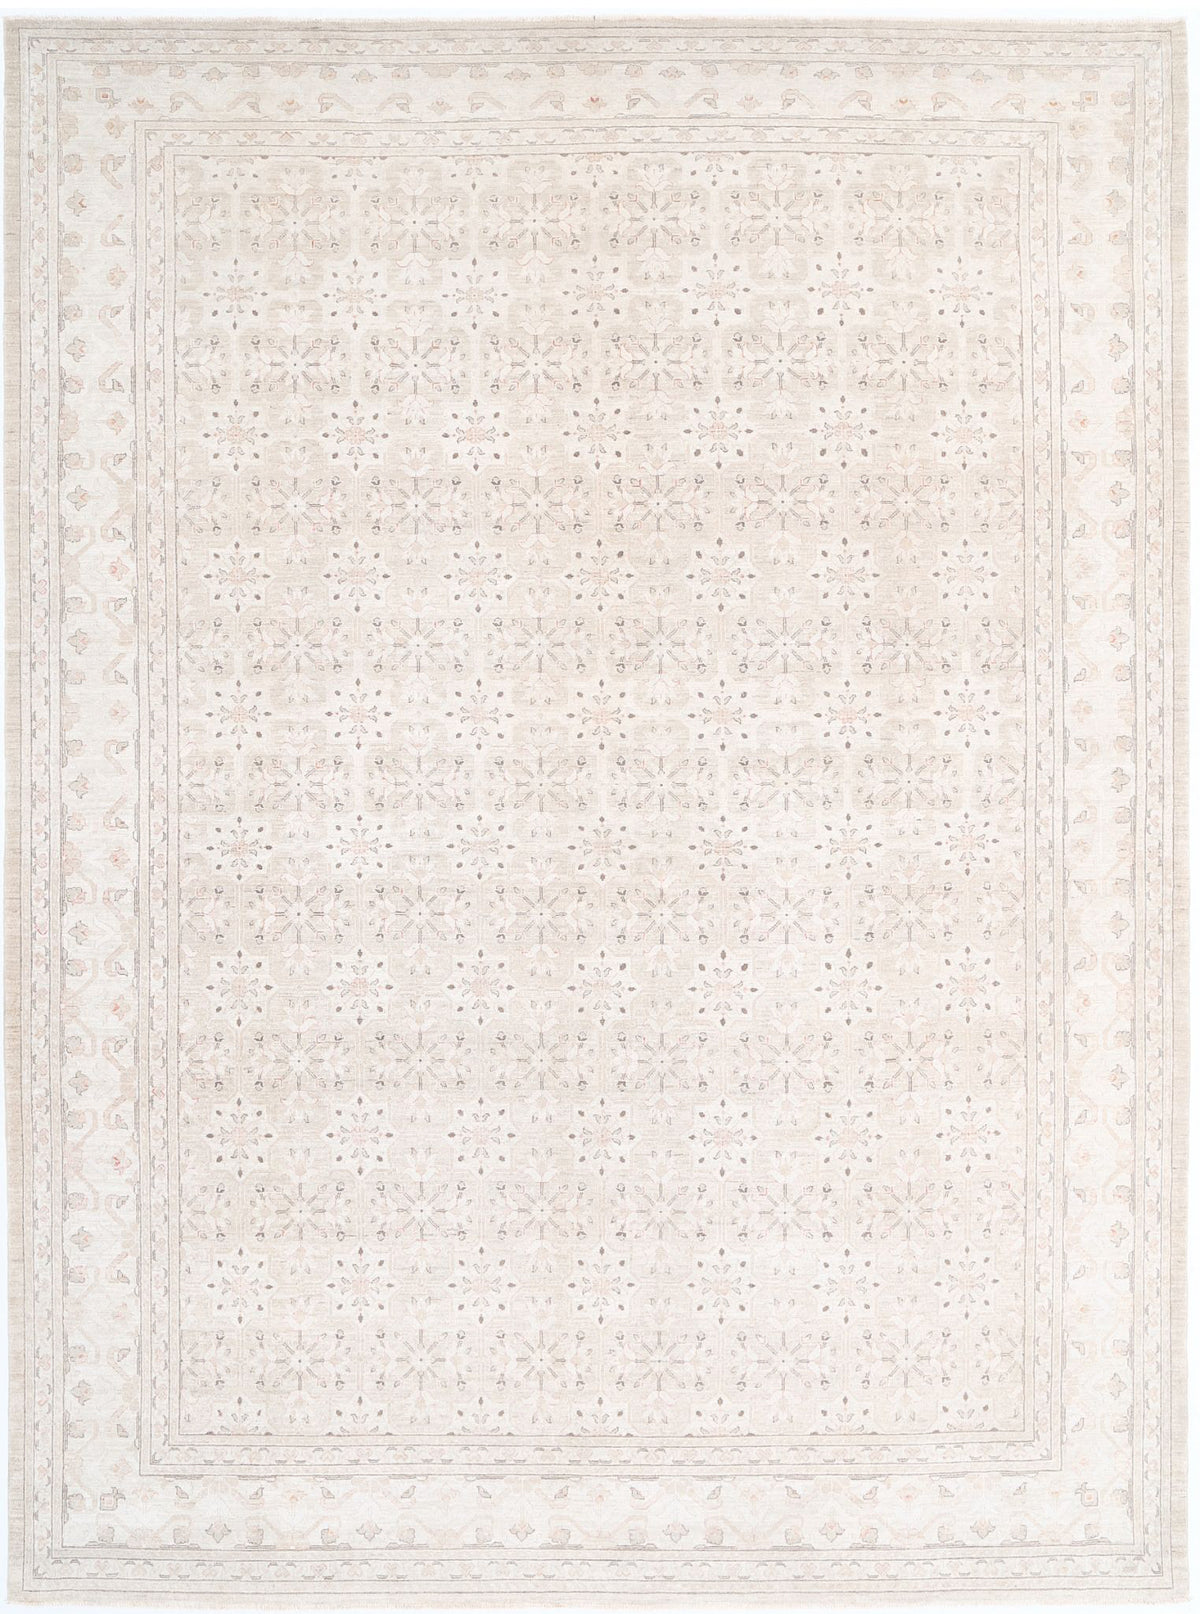 Serenity-hand-knotted-tabriz-wool-rug-5015141.jpg